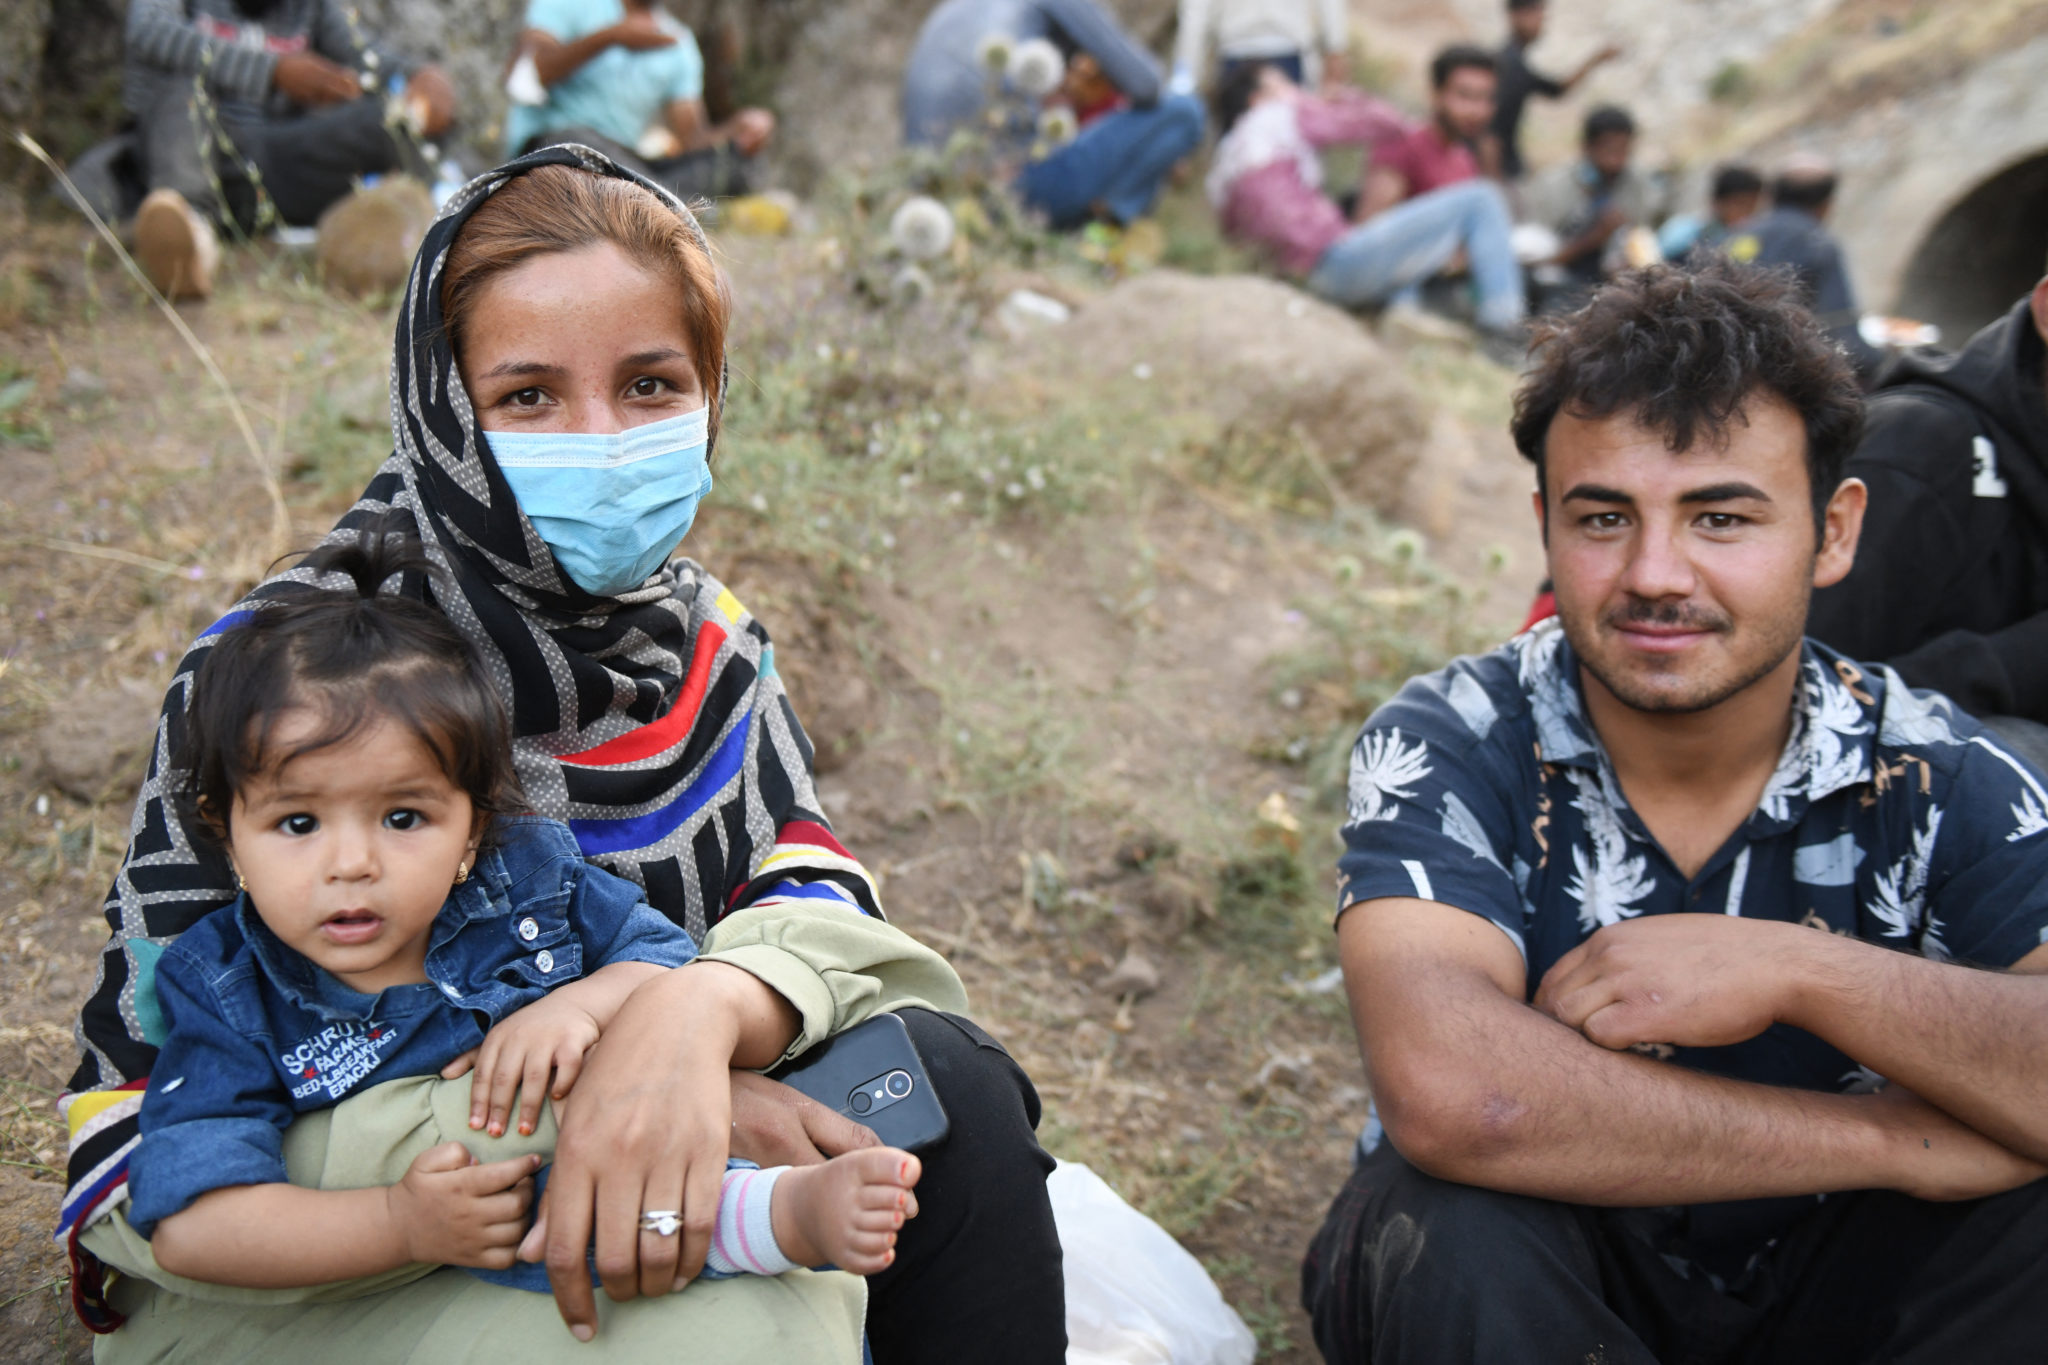 A group of Afghan migrants in Van province, Turkey, July 24, 2021. Image: ABACA/ABACA/PA Images